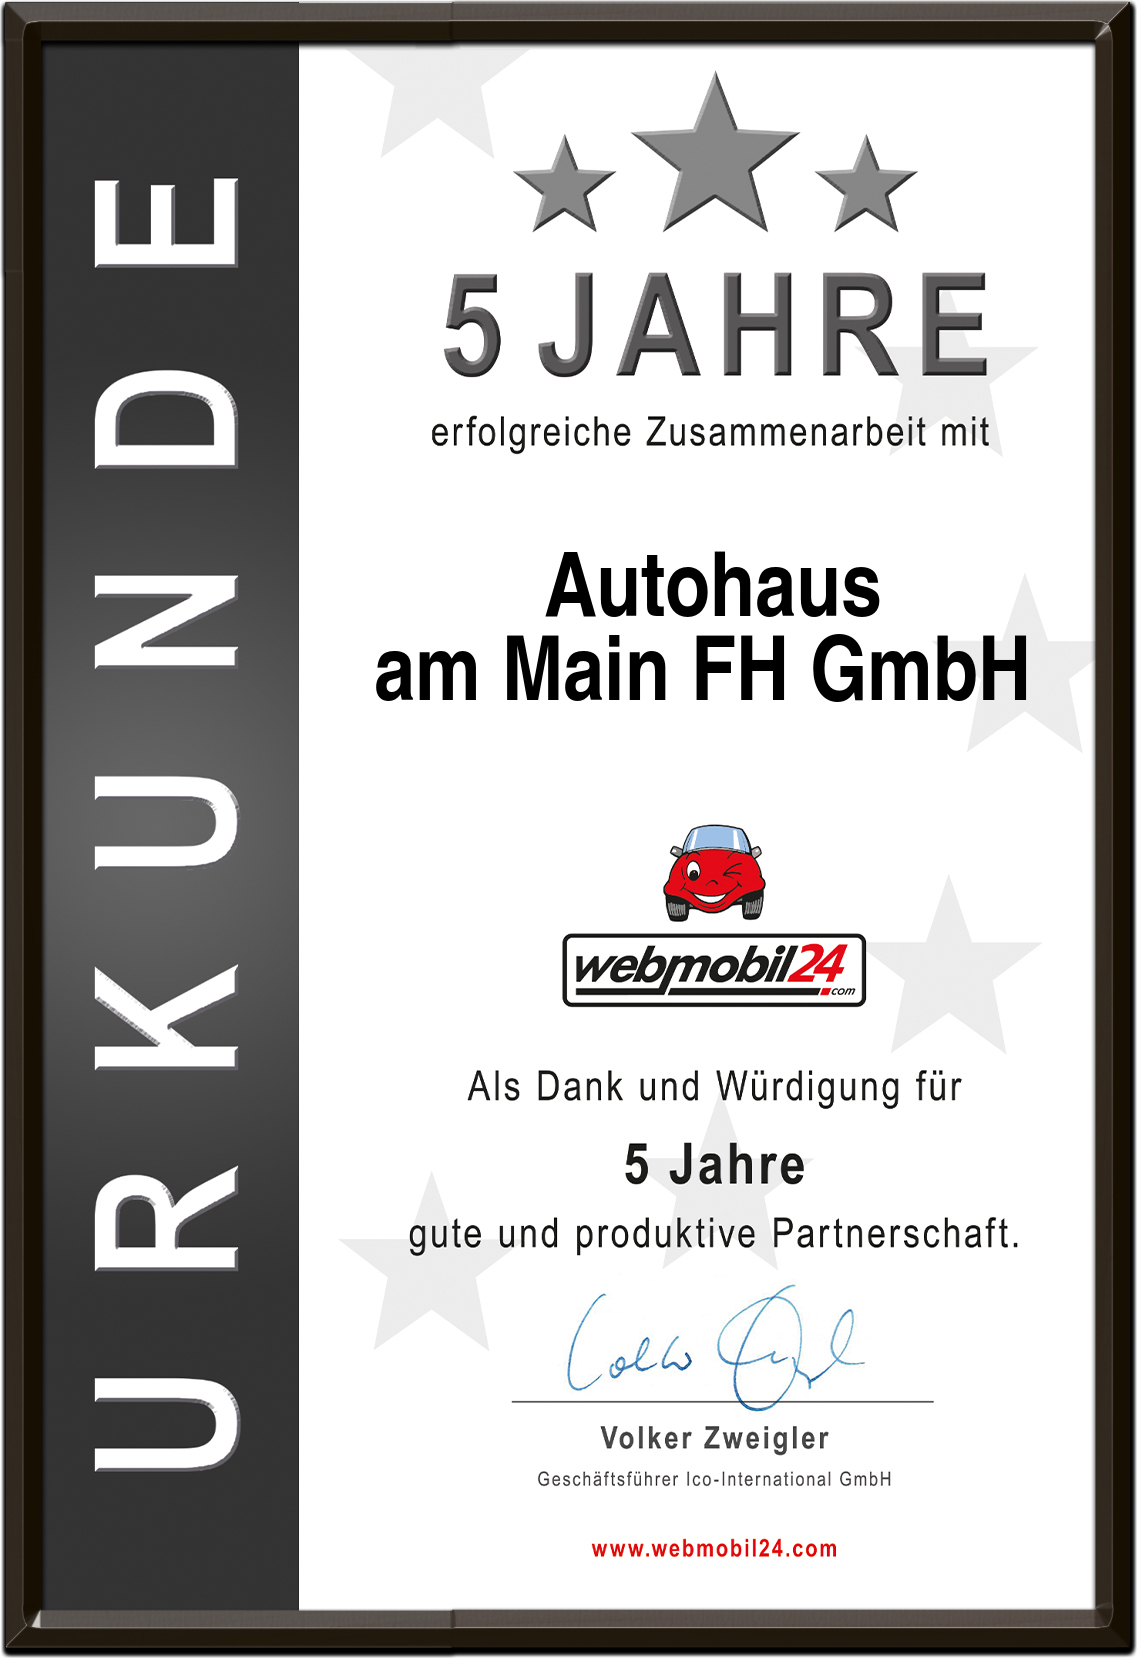 Autohaus
am Main FH GmbH 